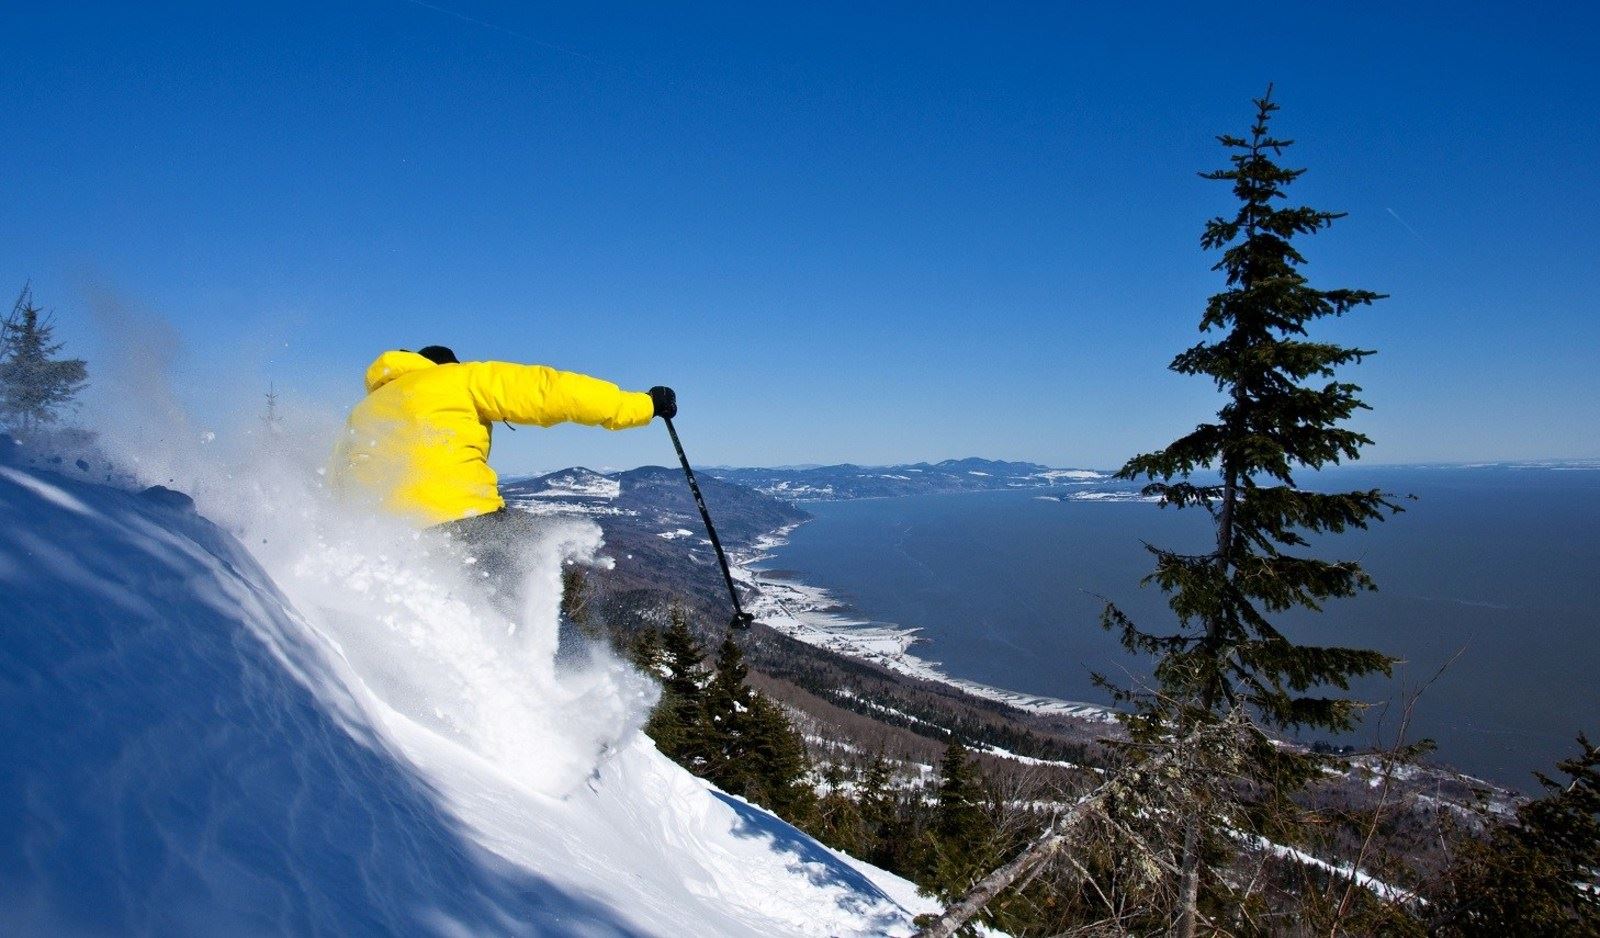 Club Med Is Bringing a Ski Resort to Canada